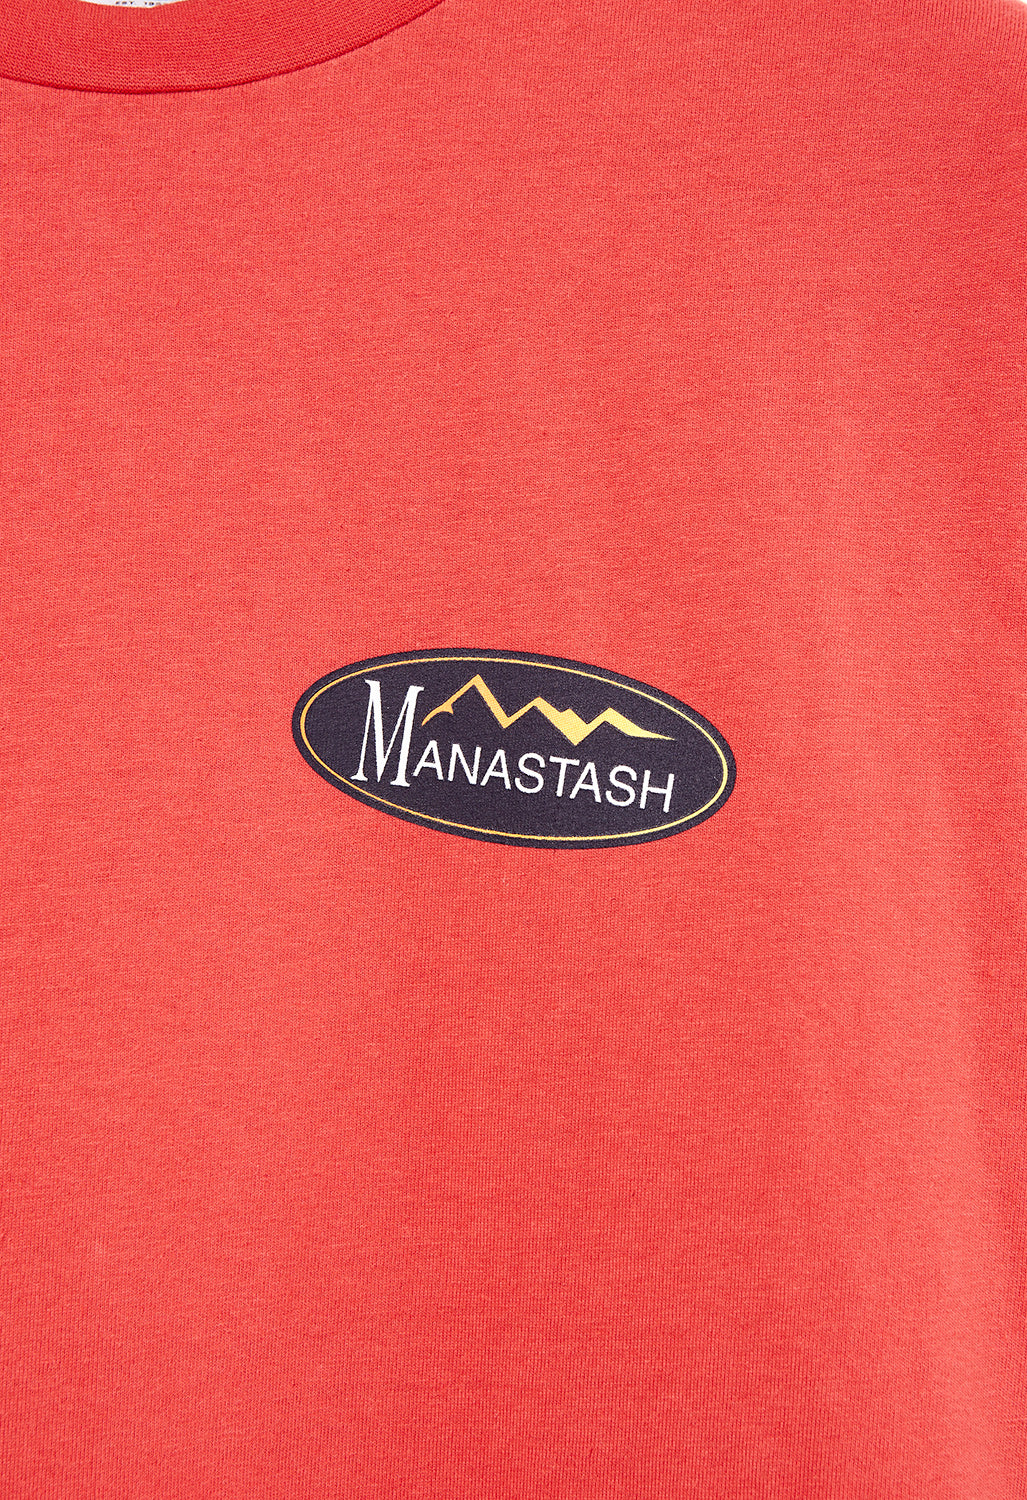 Manastash Men's Original Logo T-Shirt - Red